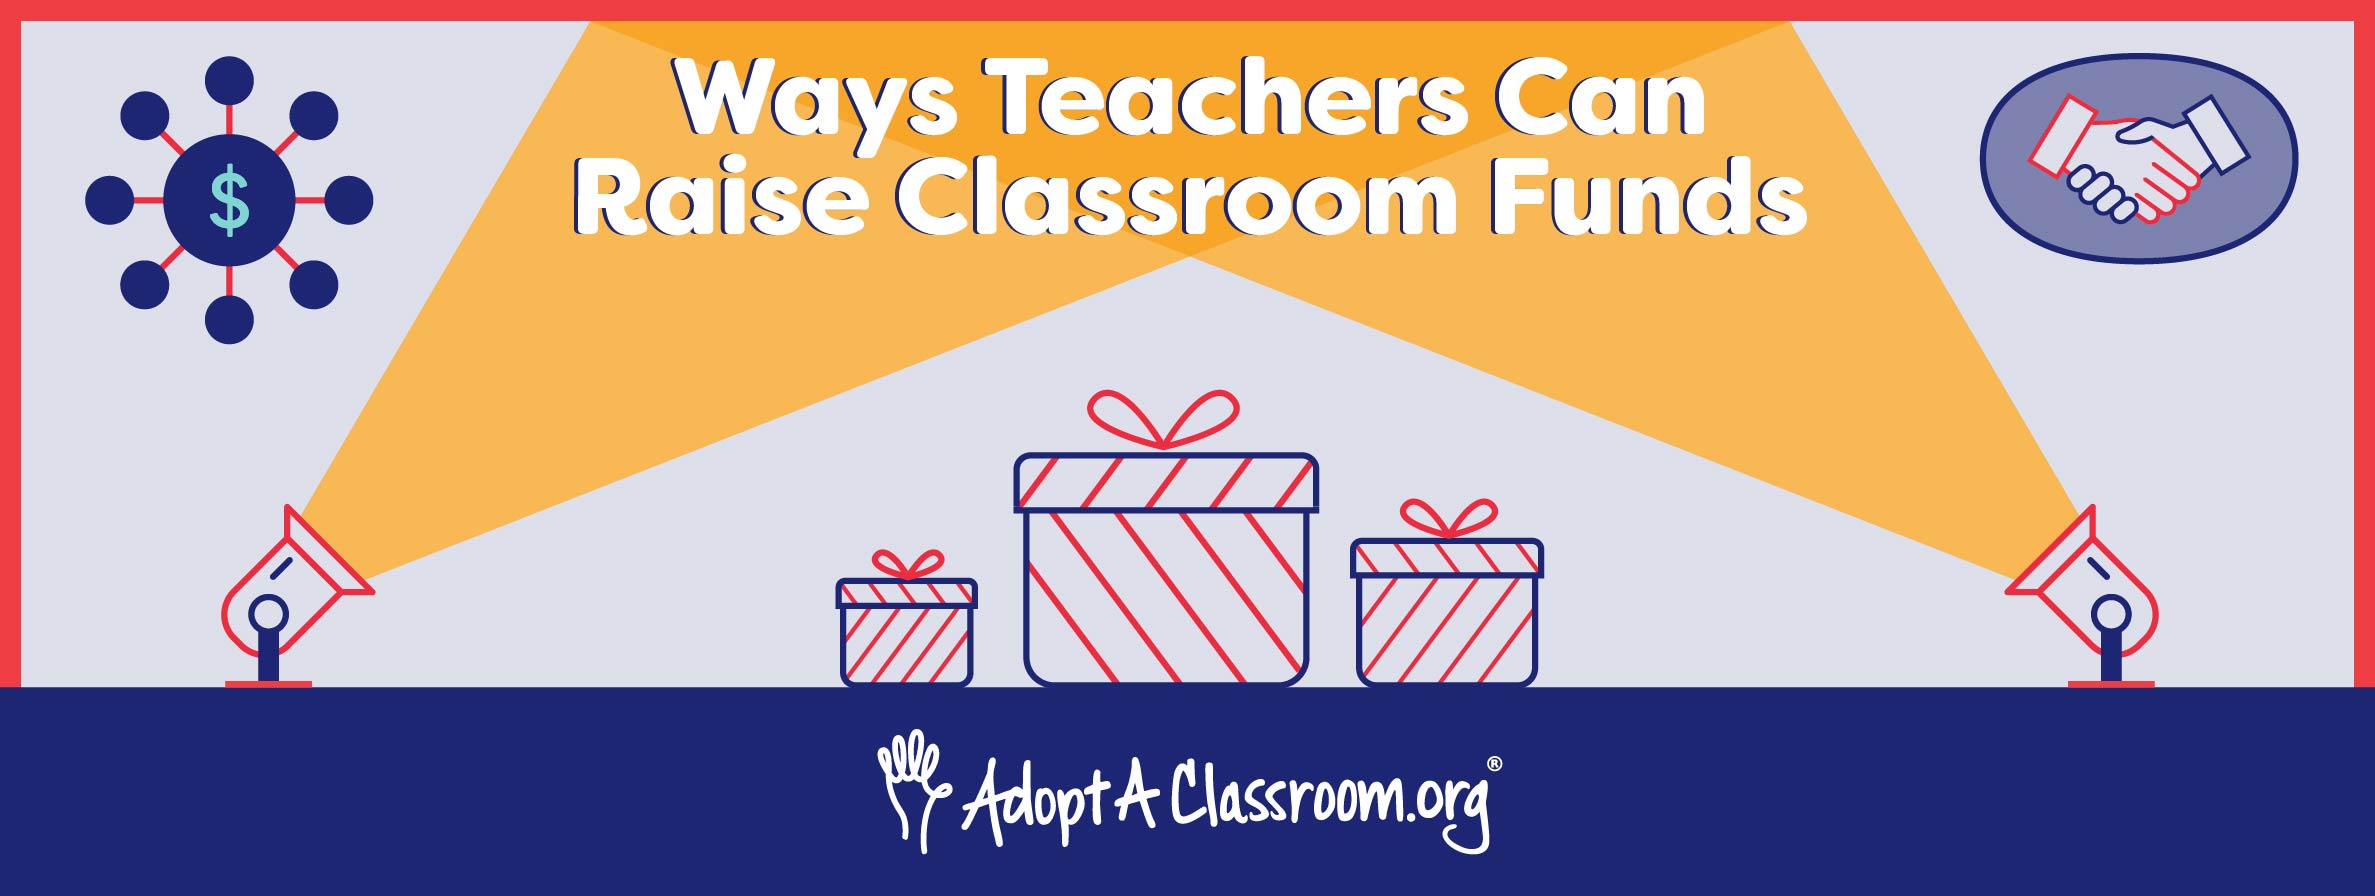 Ways Teachers Can Raise Classroom Funds